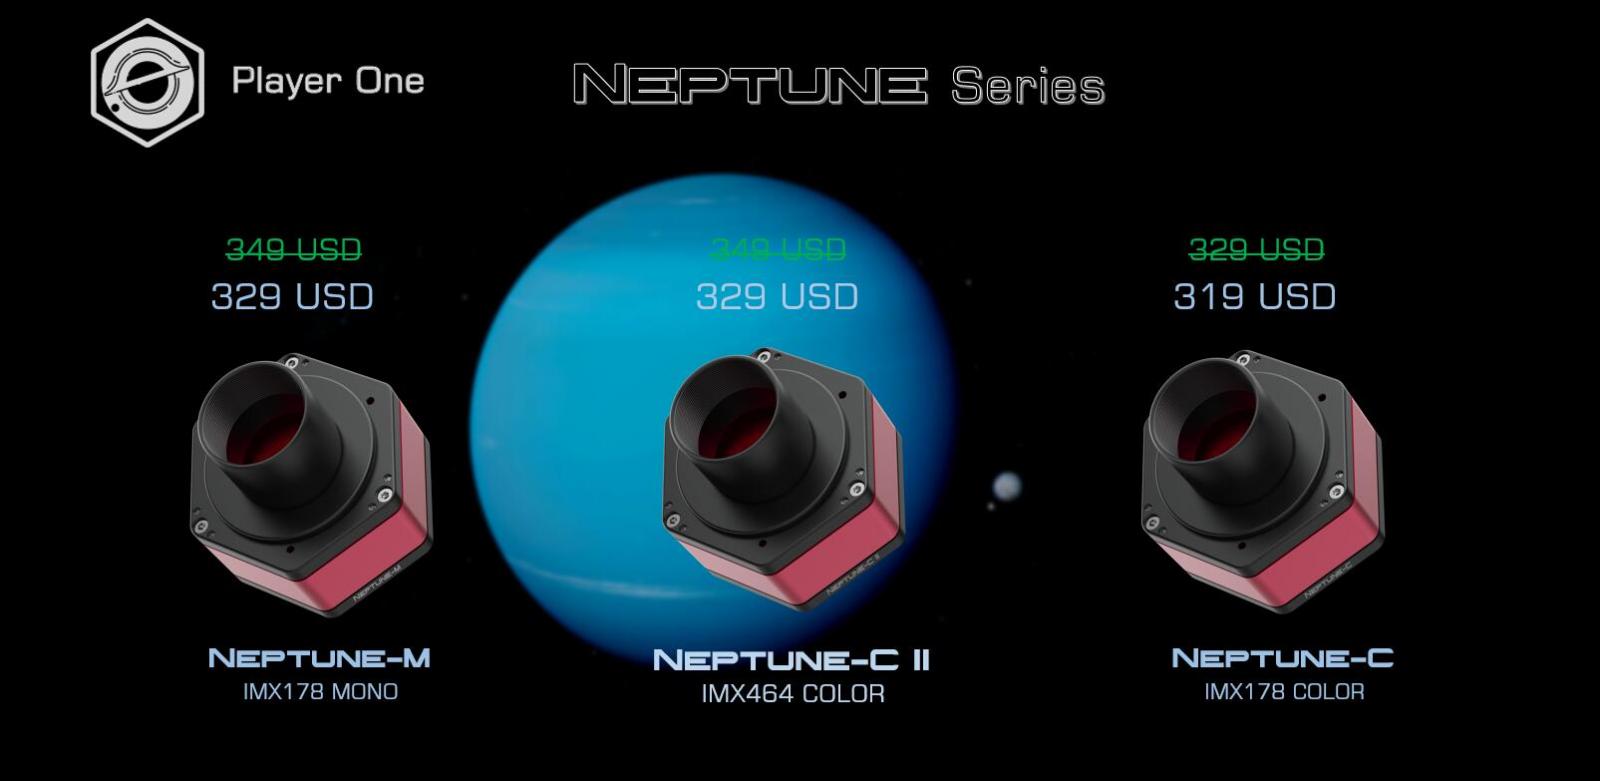 超特価セール商品 Player Neptune-CⅡ One PC周辺機器